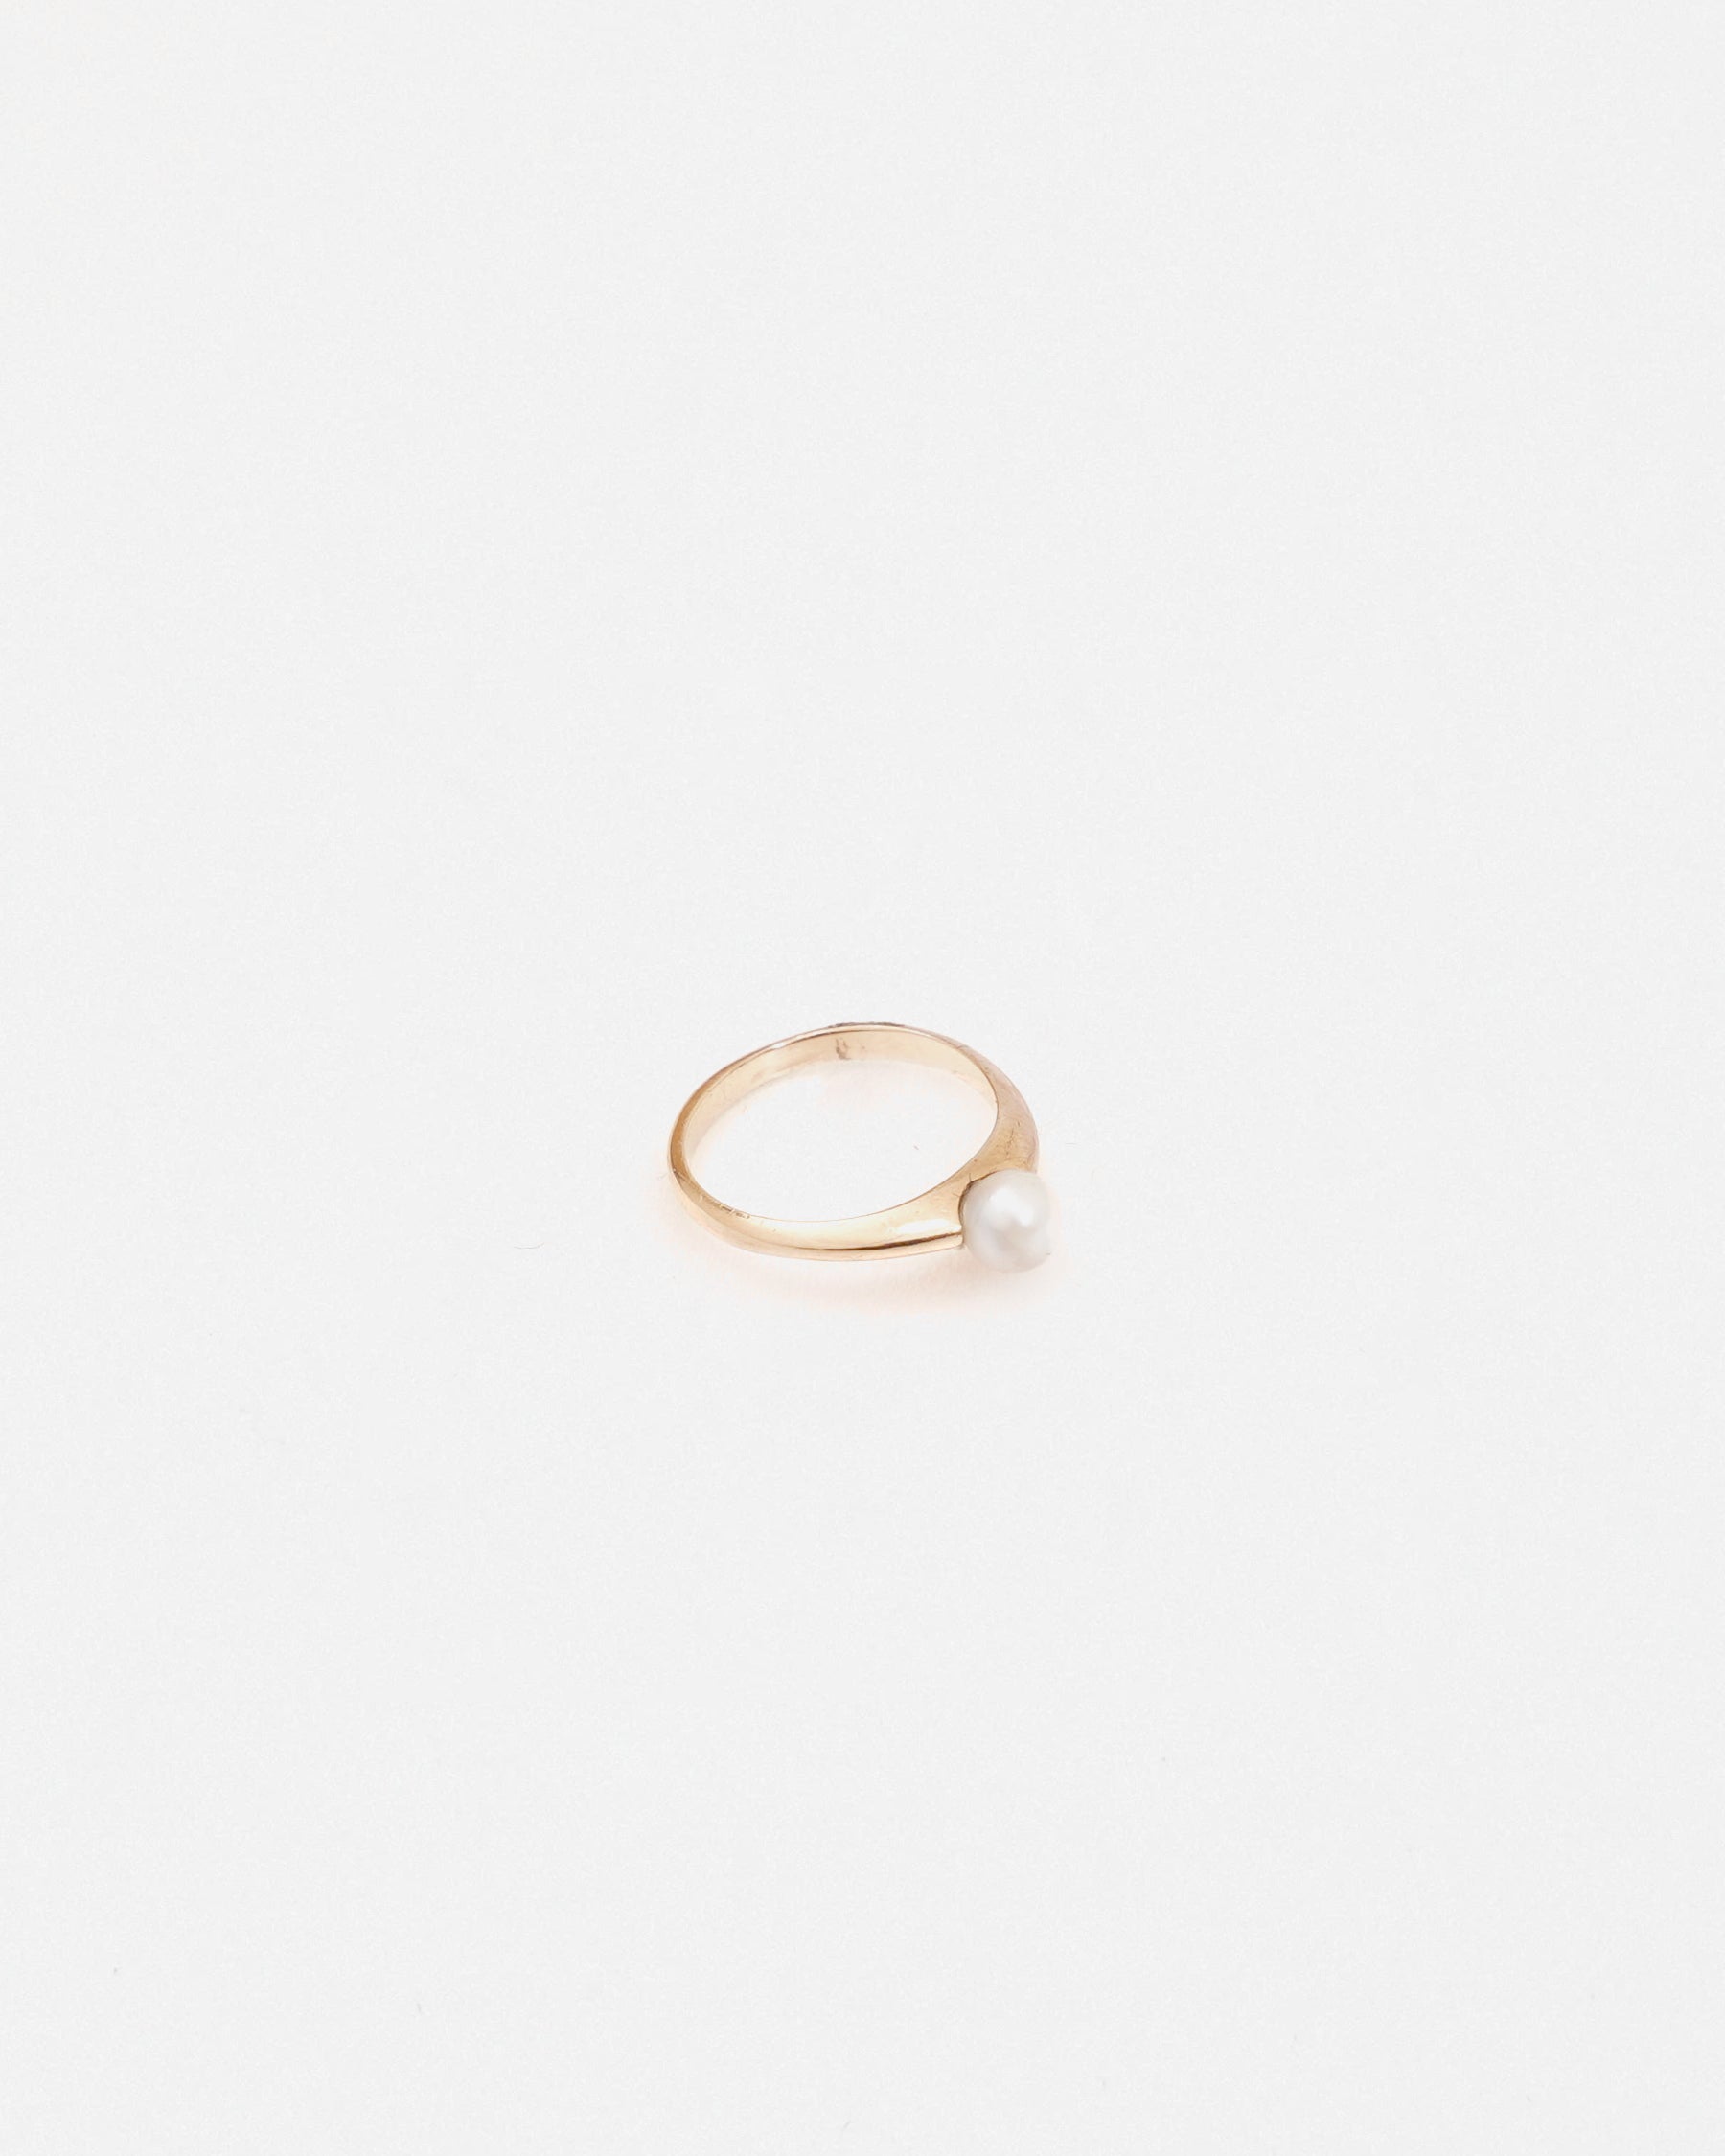 10k Gold Ring : size10